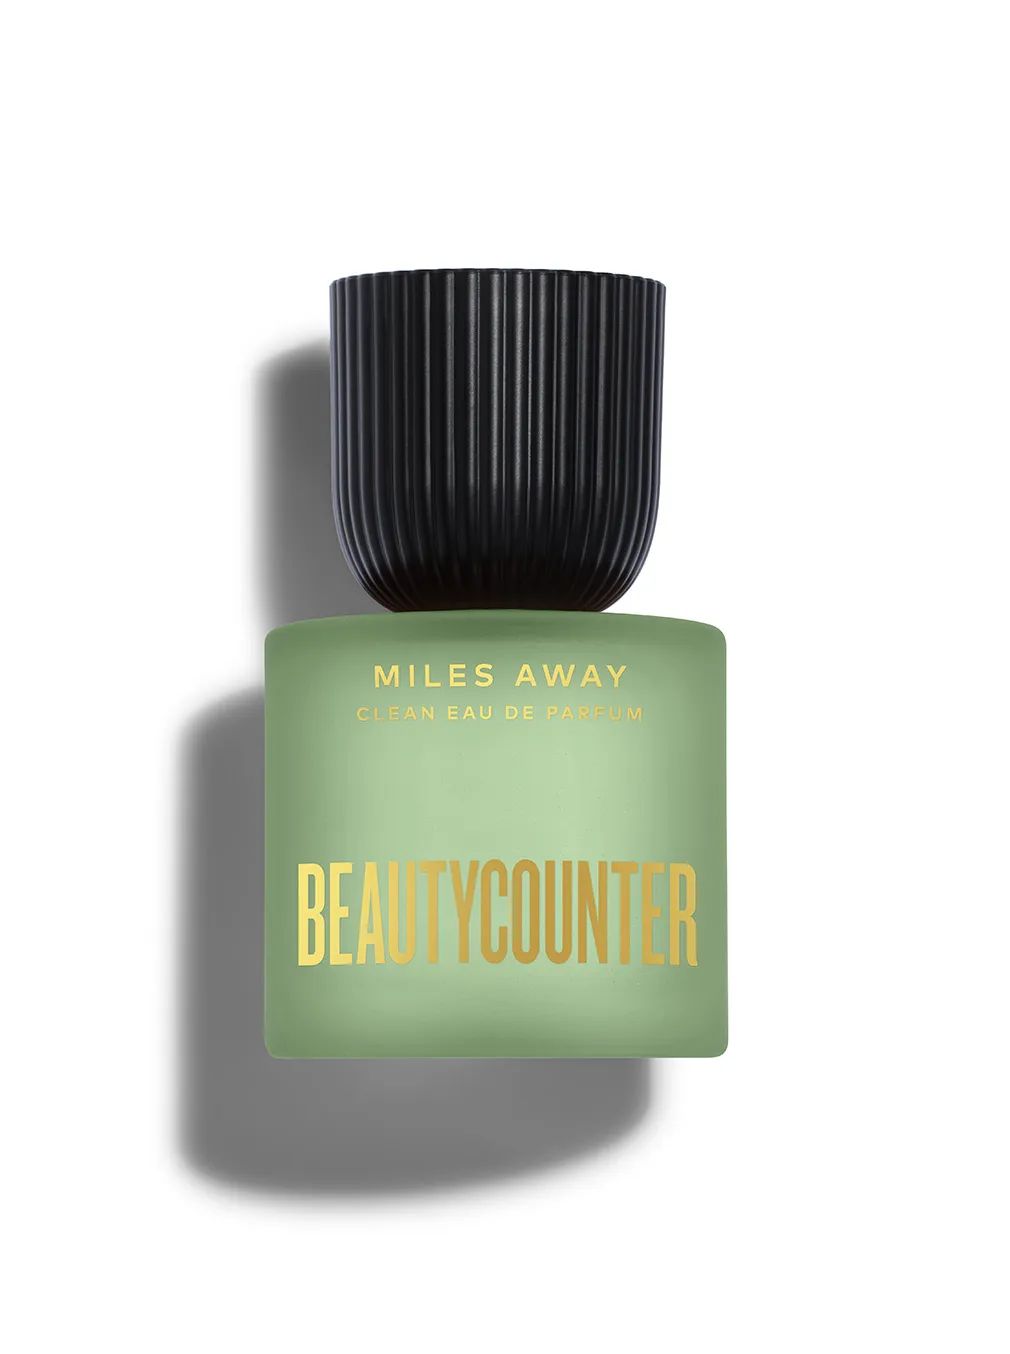 Miles Away Clean Eau De Parfum - Beautycounter - Skin Care, Makeup, Bath and Body and more! | Beautycounter.com